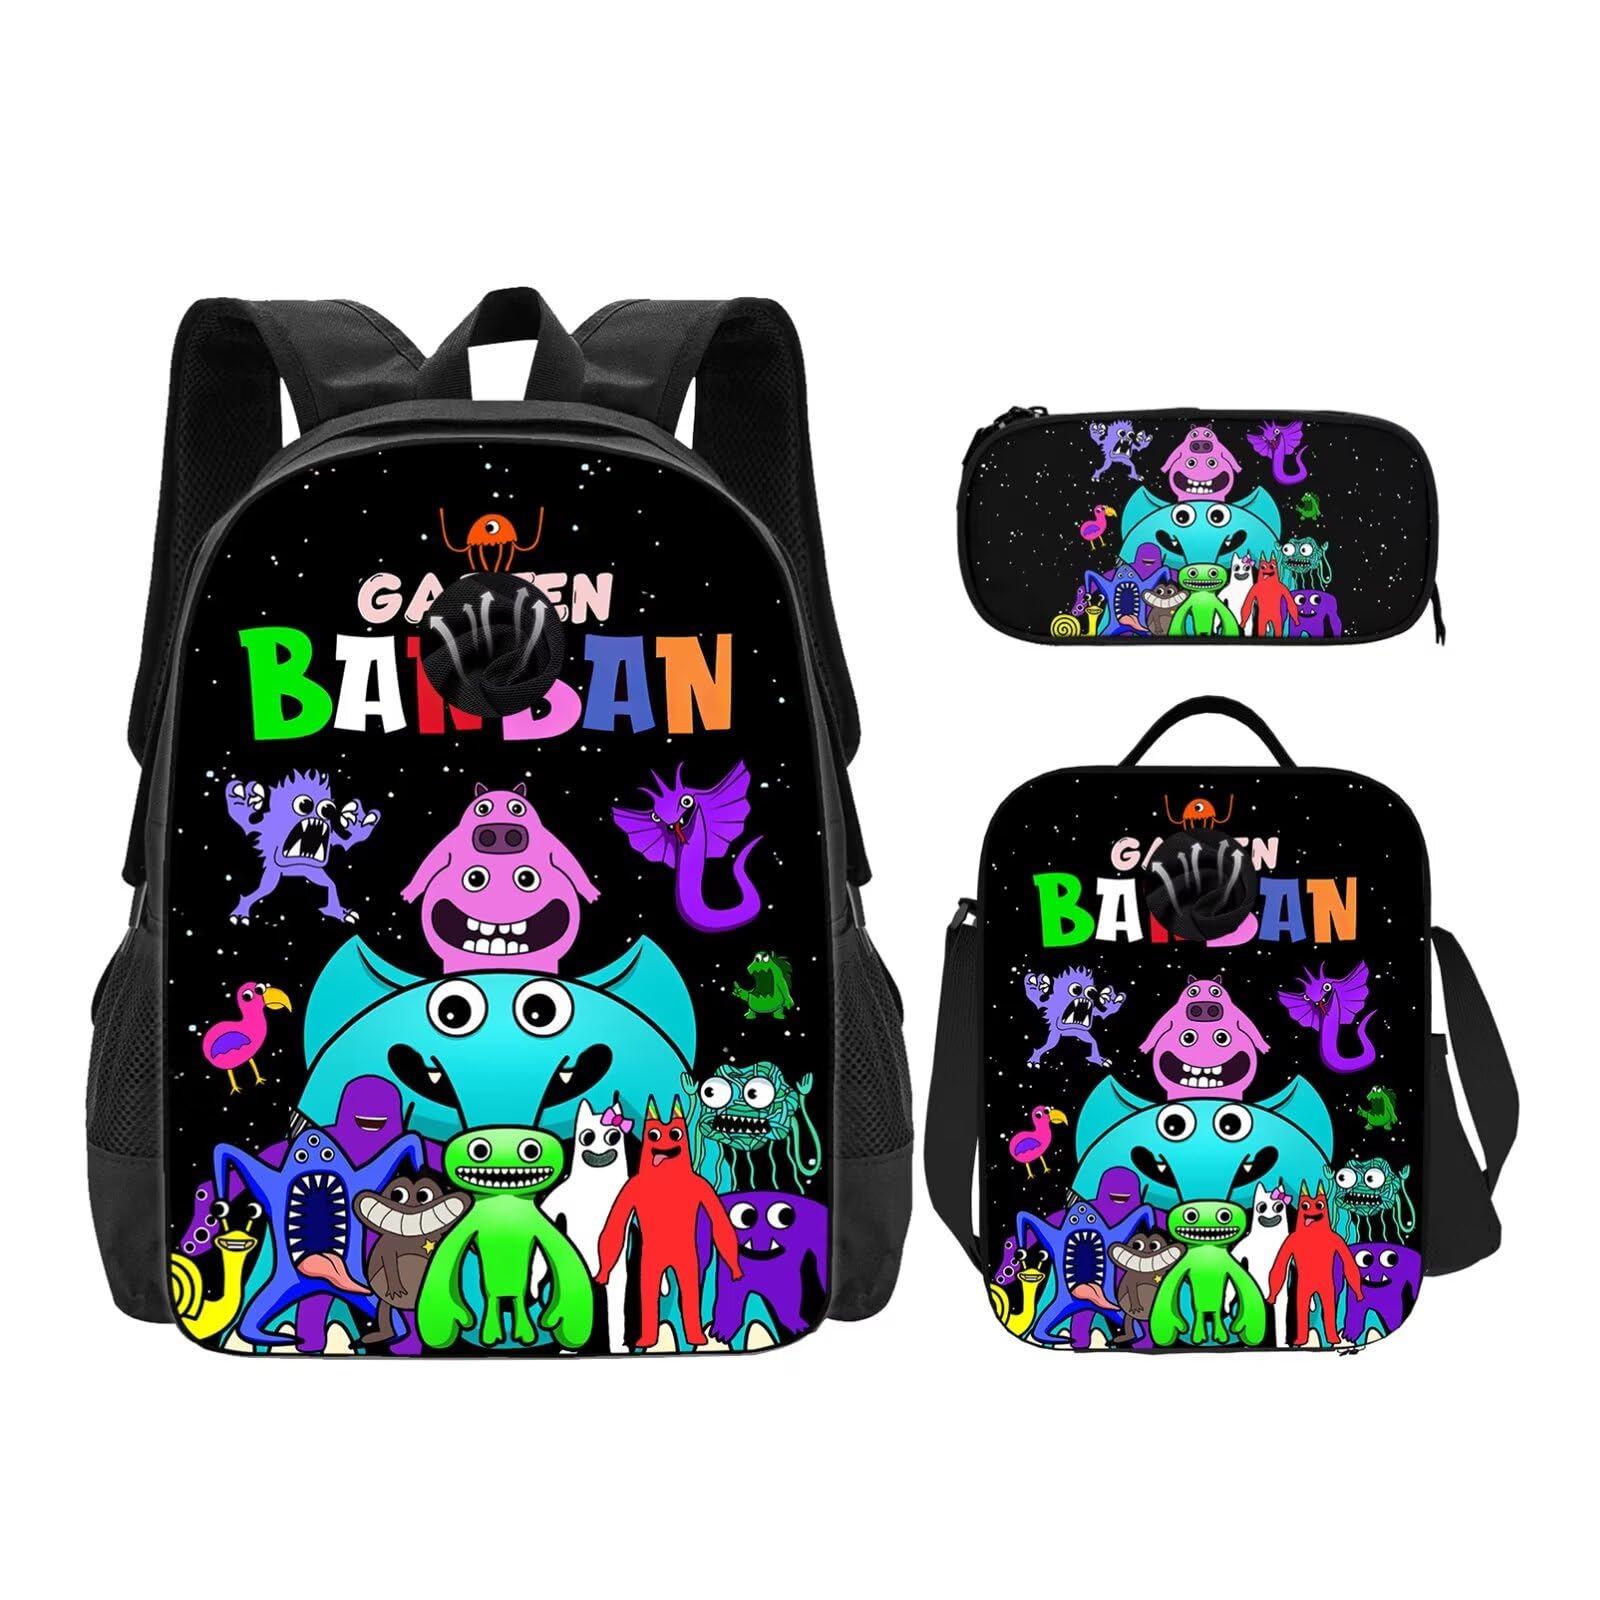 keketuoxi Kids Backpack for Boys Girls Fashion School Backpack with Adjustable Padded Straps 3PSC-C